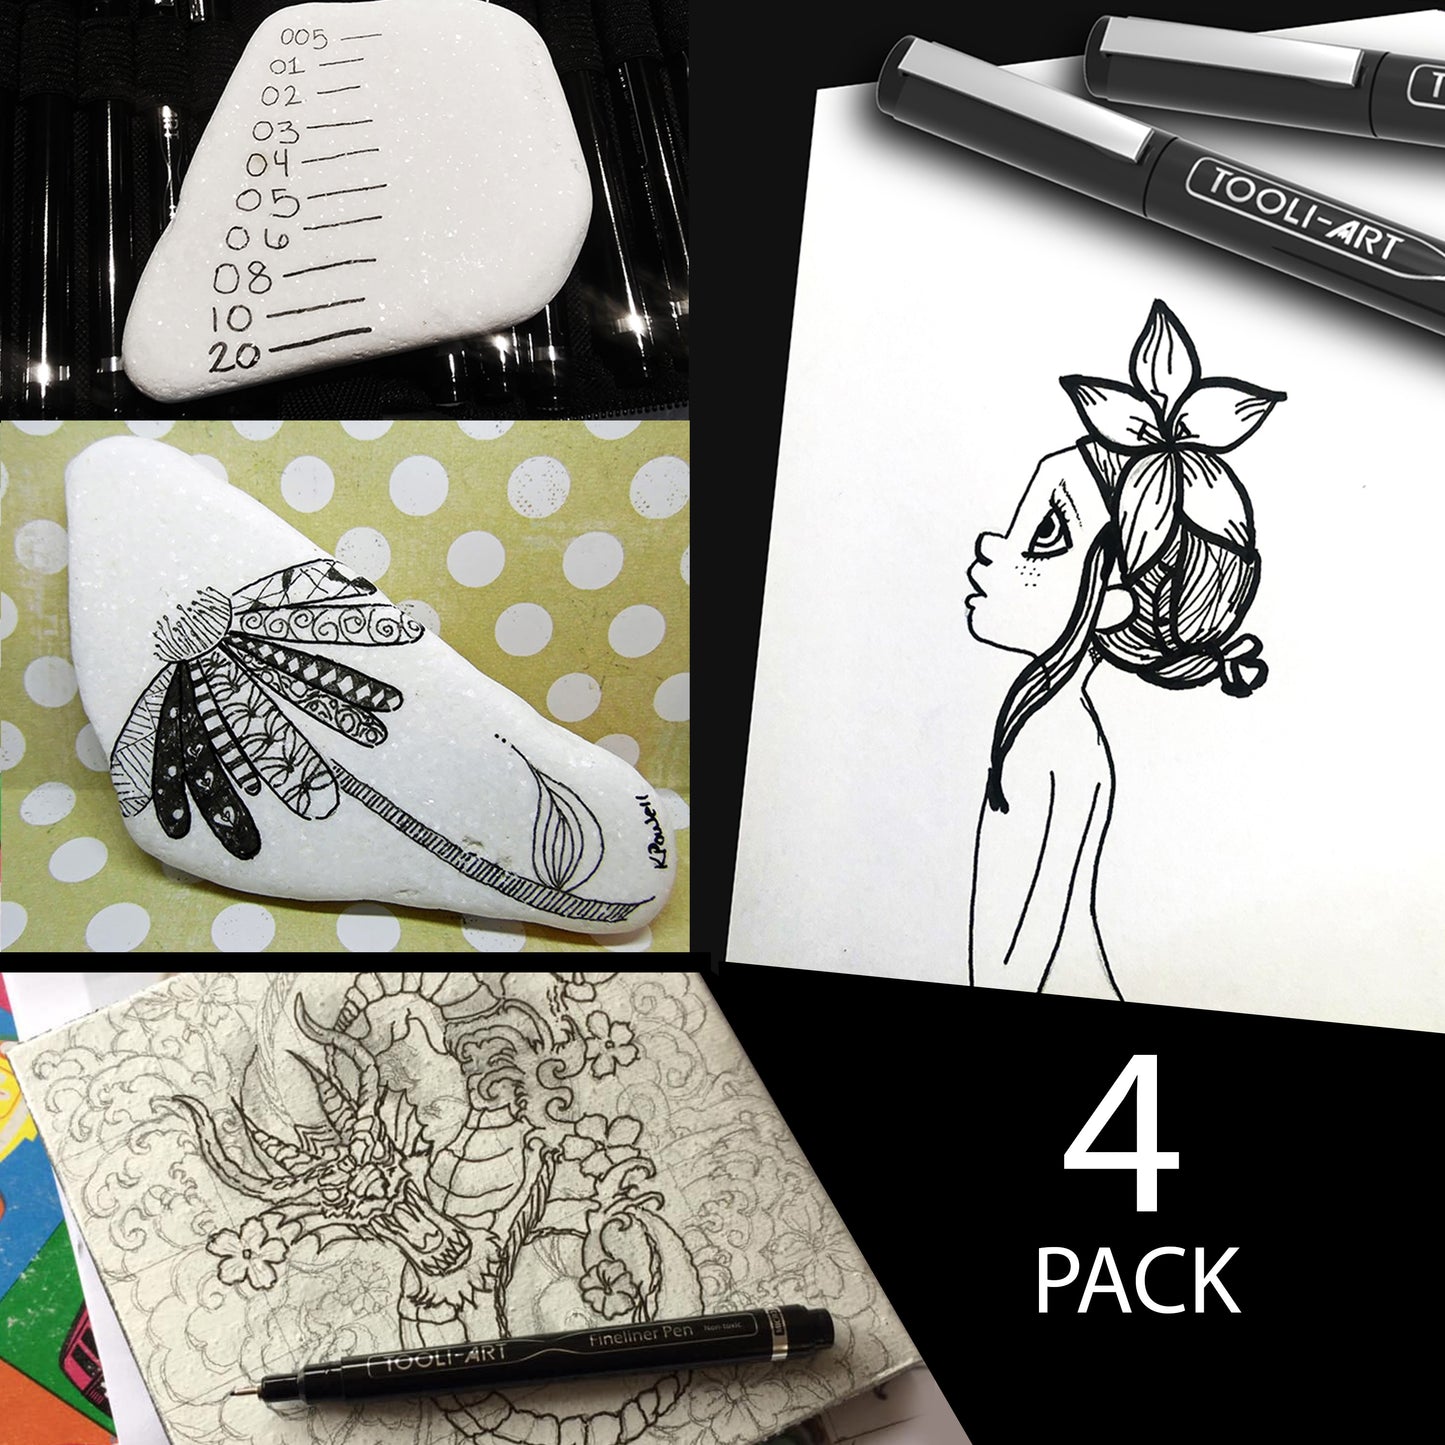 TOOLI-ART Micro-Line Pens 4 PACK Black, Fineliner, Multiliner, Archival Ink, Artist Illustration, Architecture, Technical Drawing